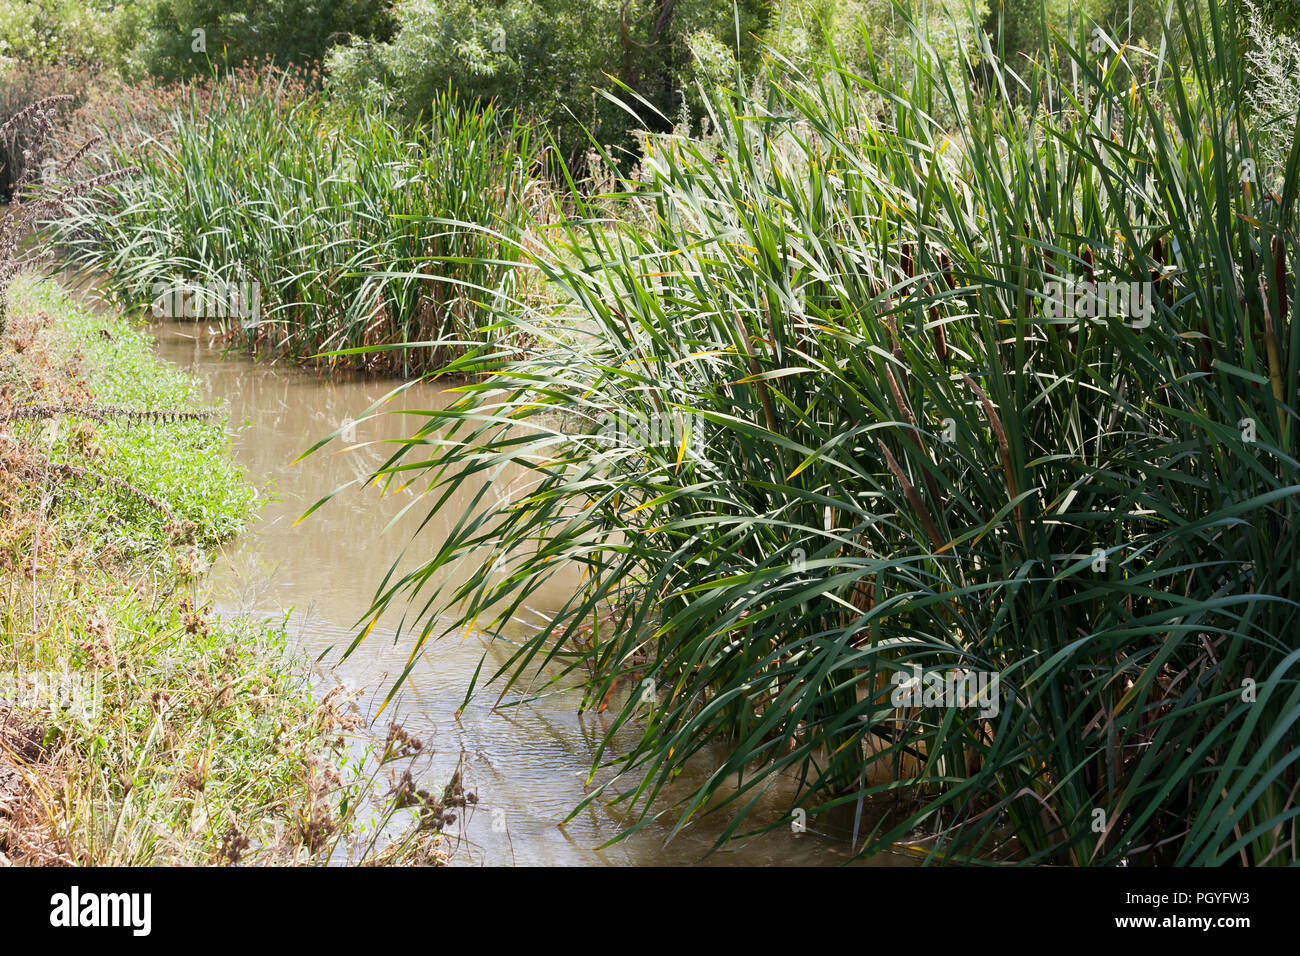 Tifa comune impianto di reed, aka reedmace, giunco, (Typha latifolia) - California USA Foto Stock